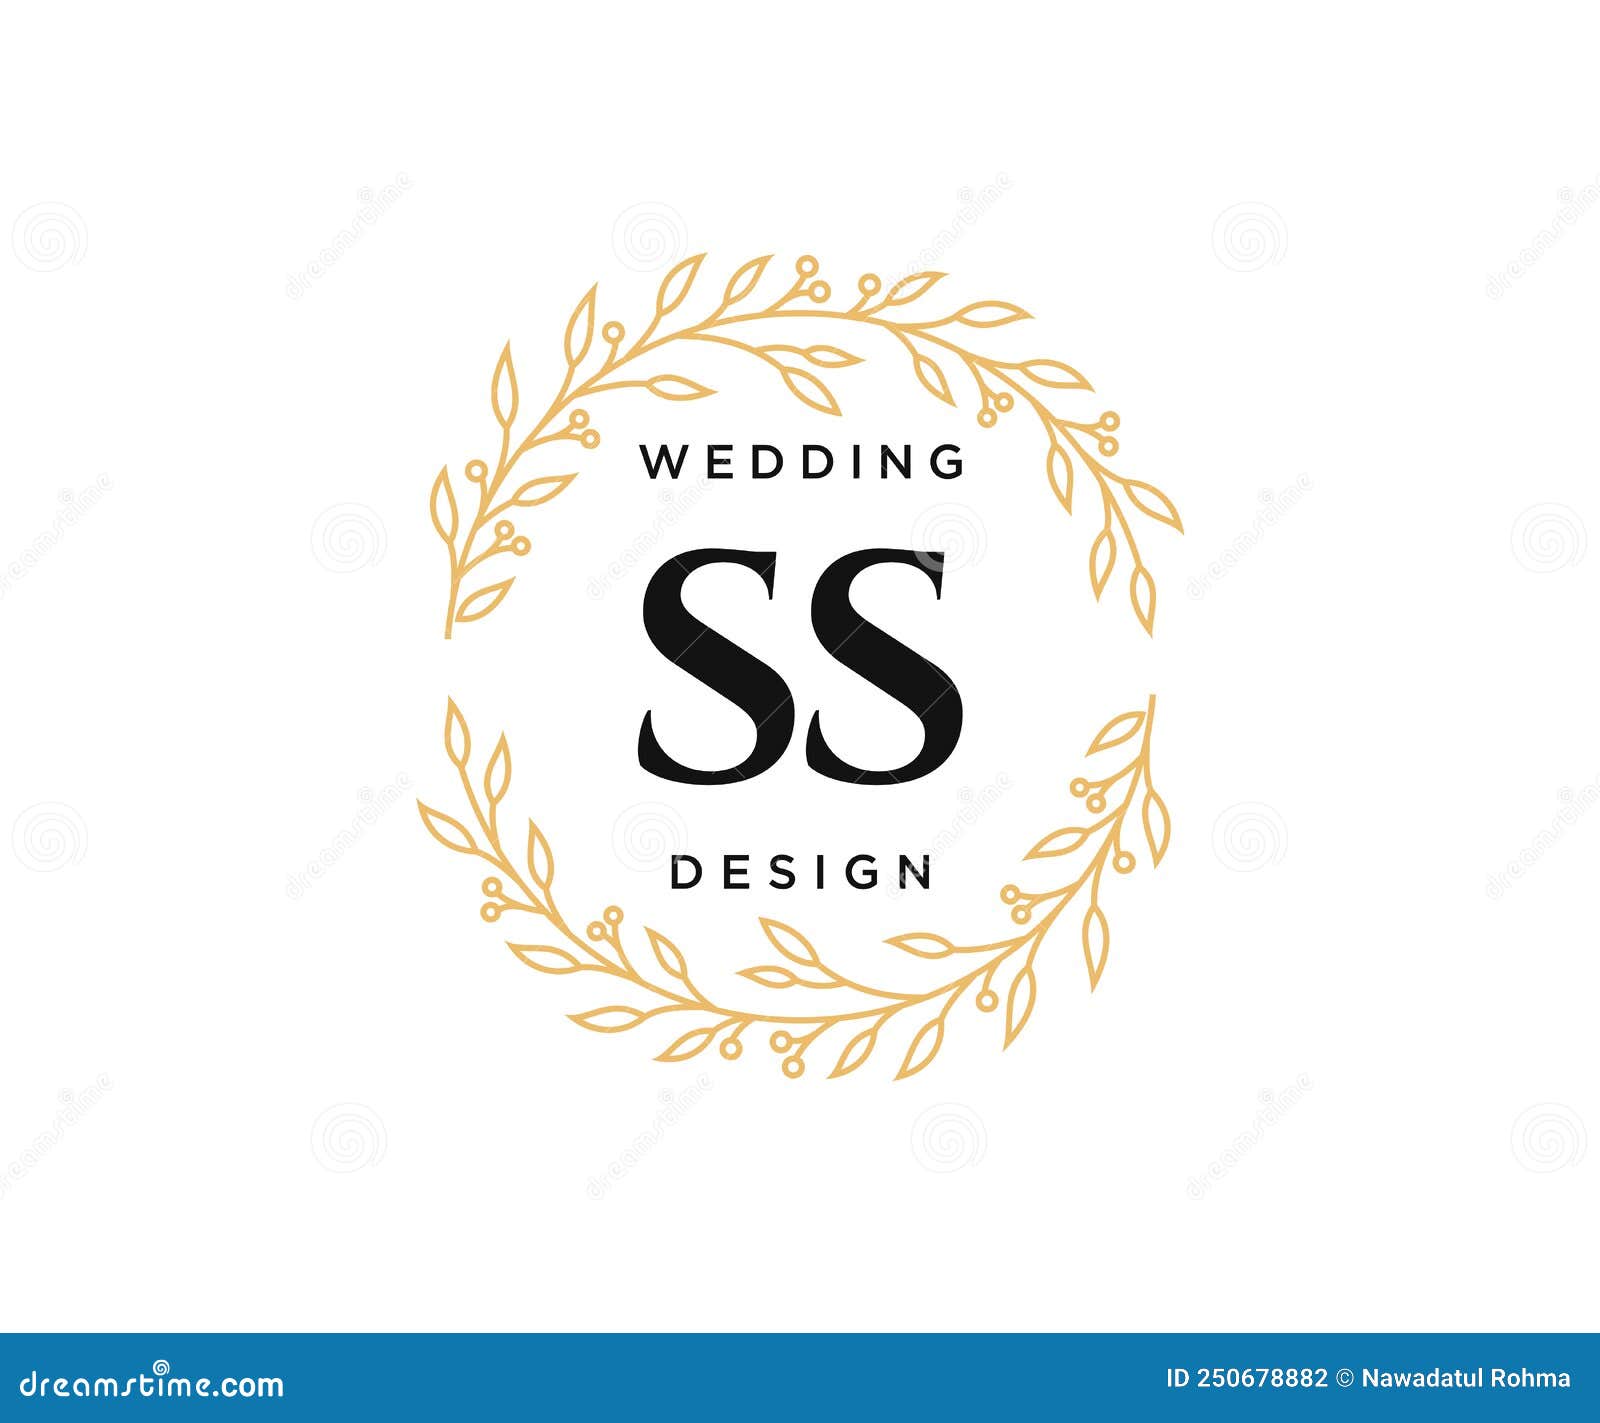 M&K Wedding Logo  Wedding logo monogram, Wedding logos, Wedding logo design